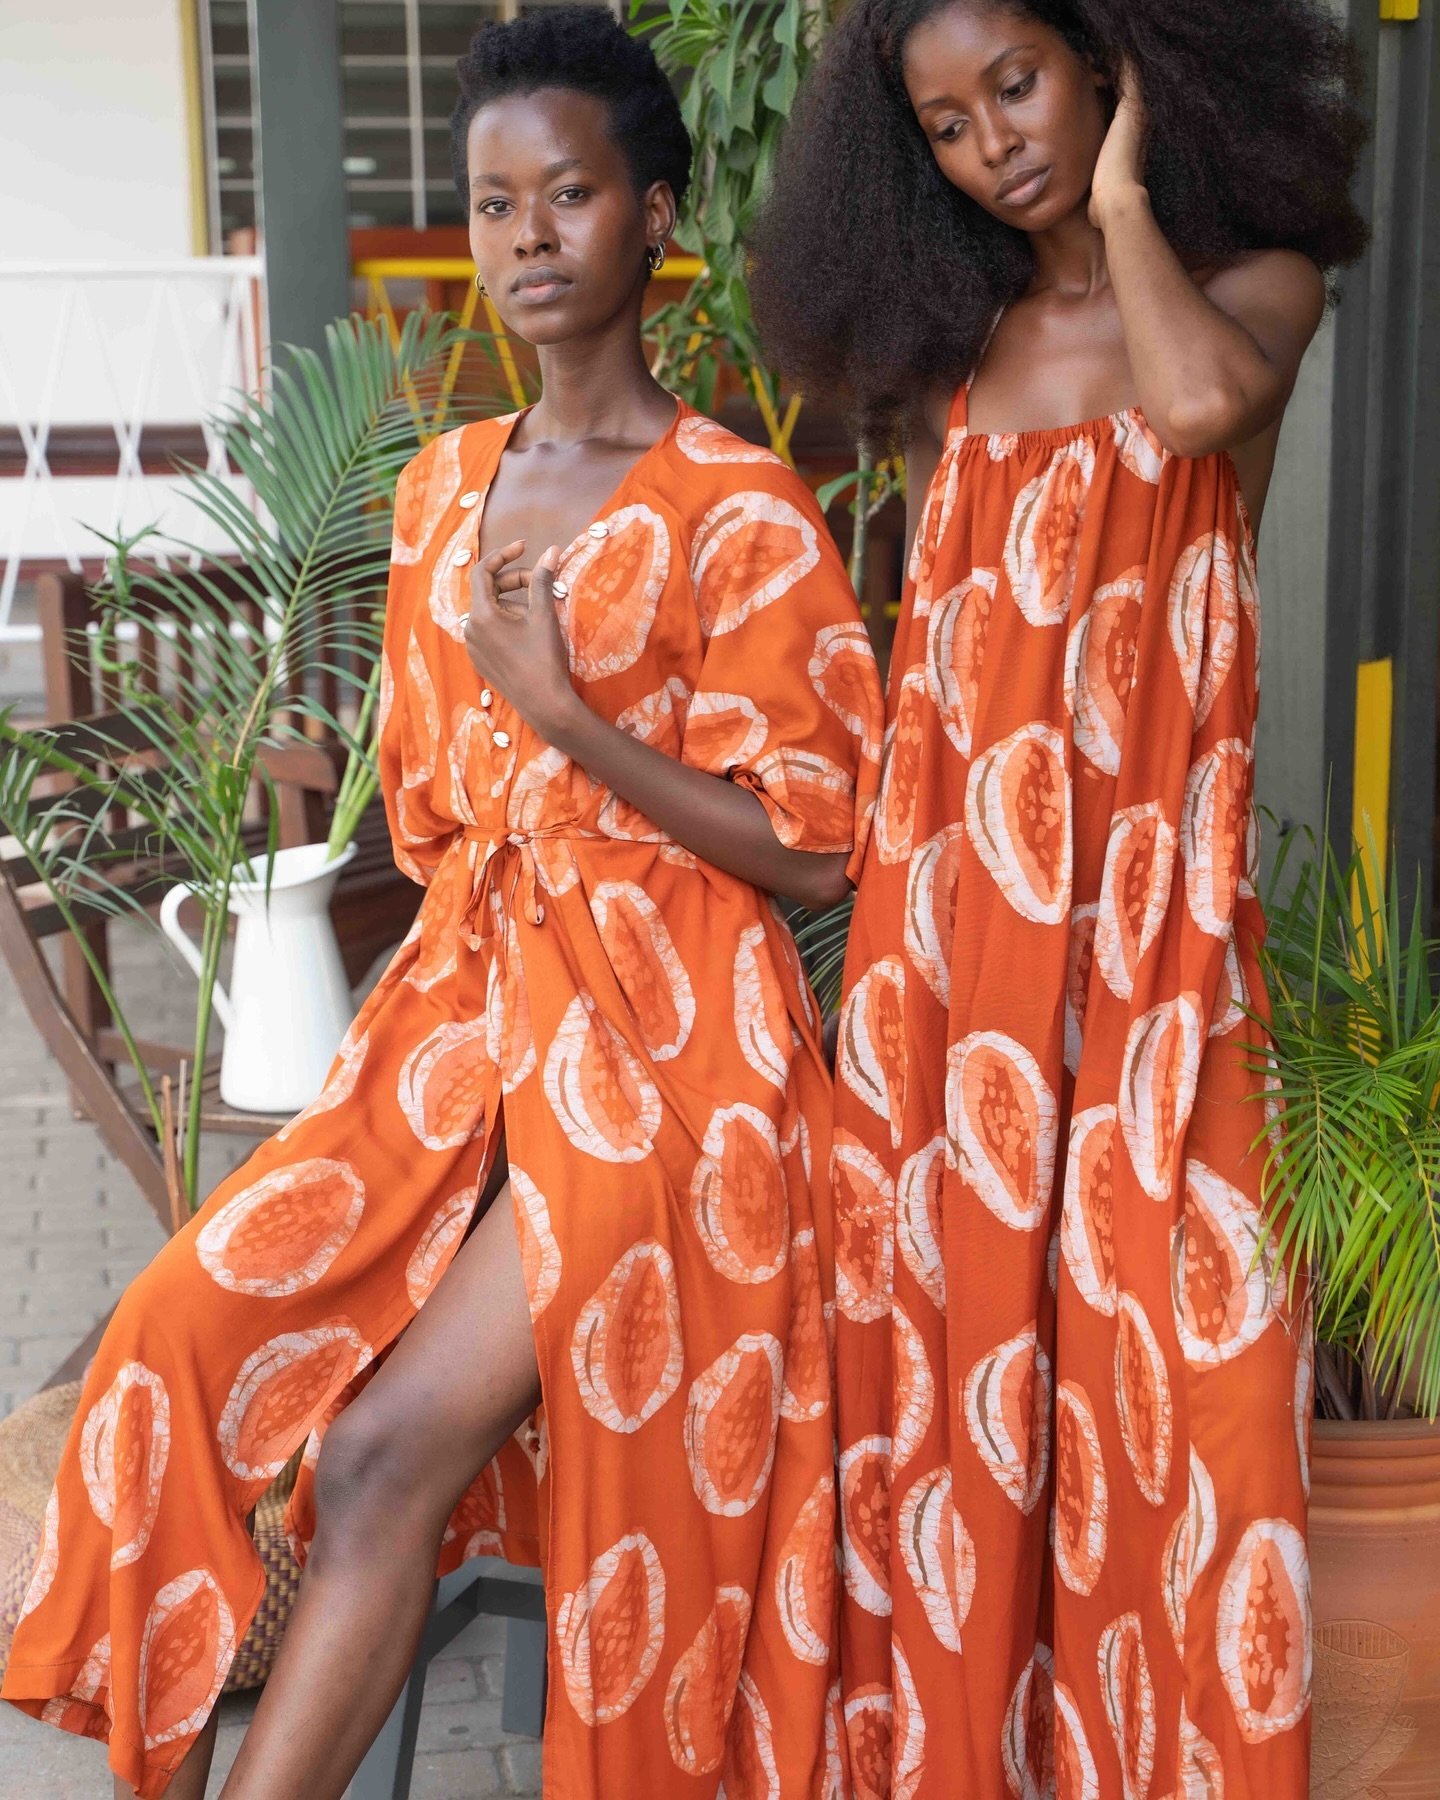 Kimono or a dress ? Both !!! Our flowy dresses are coming to you soon in more beautiful prints 🧡 
.
.
.
#orangedresses #prints #colorfulfashion #madeinghana🇬🇭 #madeinafrica🌍 #batik #handdyedfabric #slowfashion #madetolast #kimonos #resortwearbran